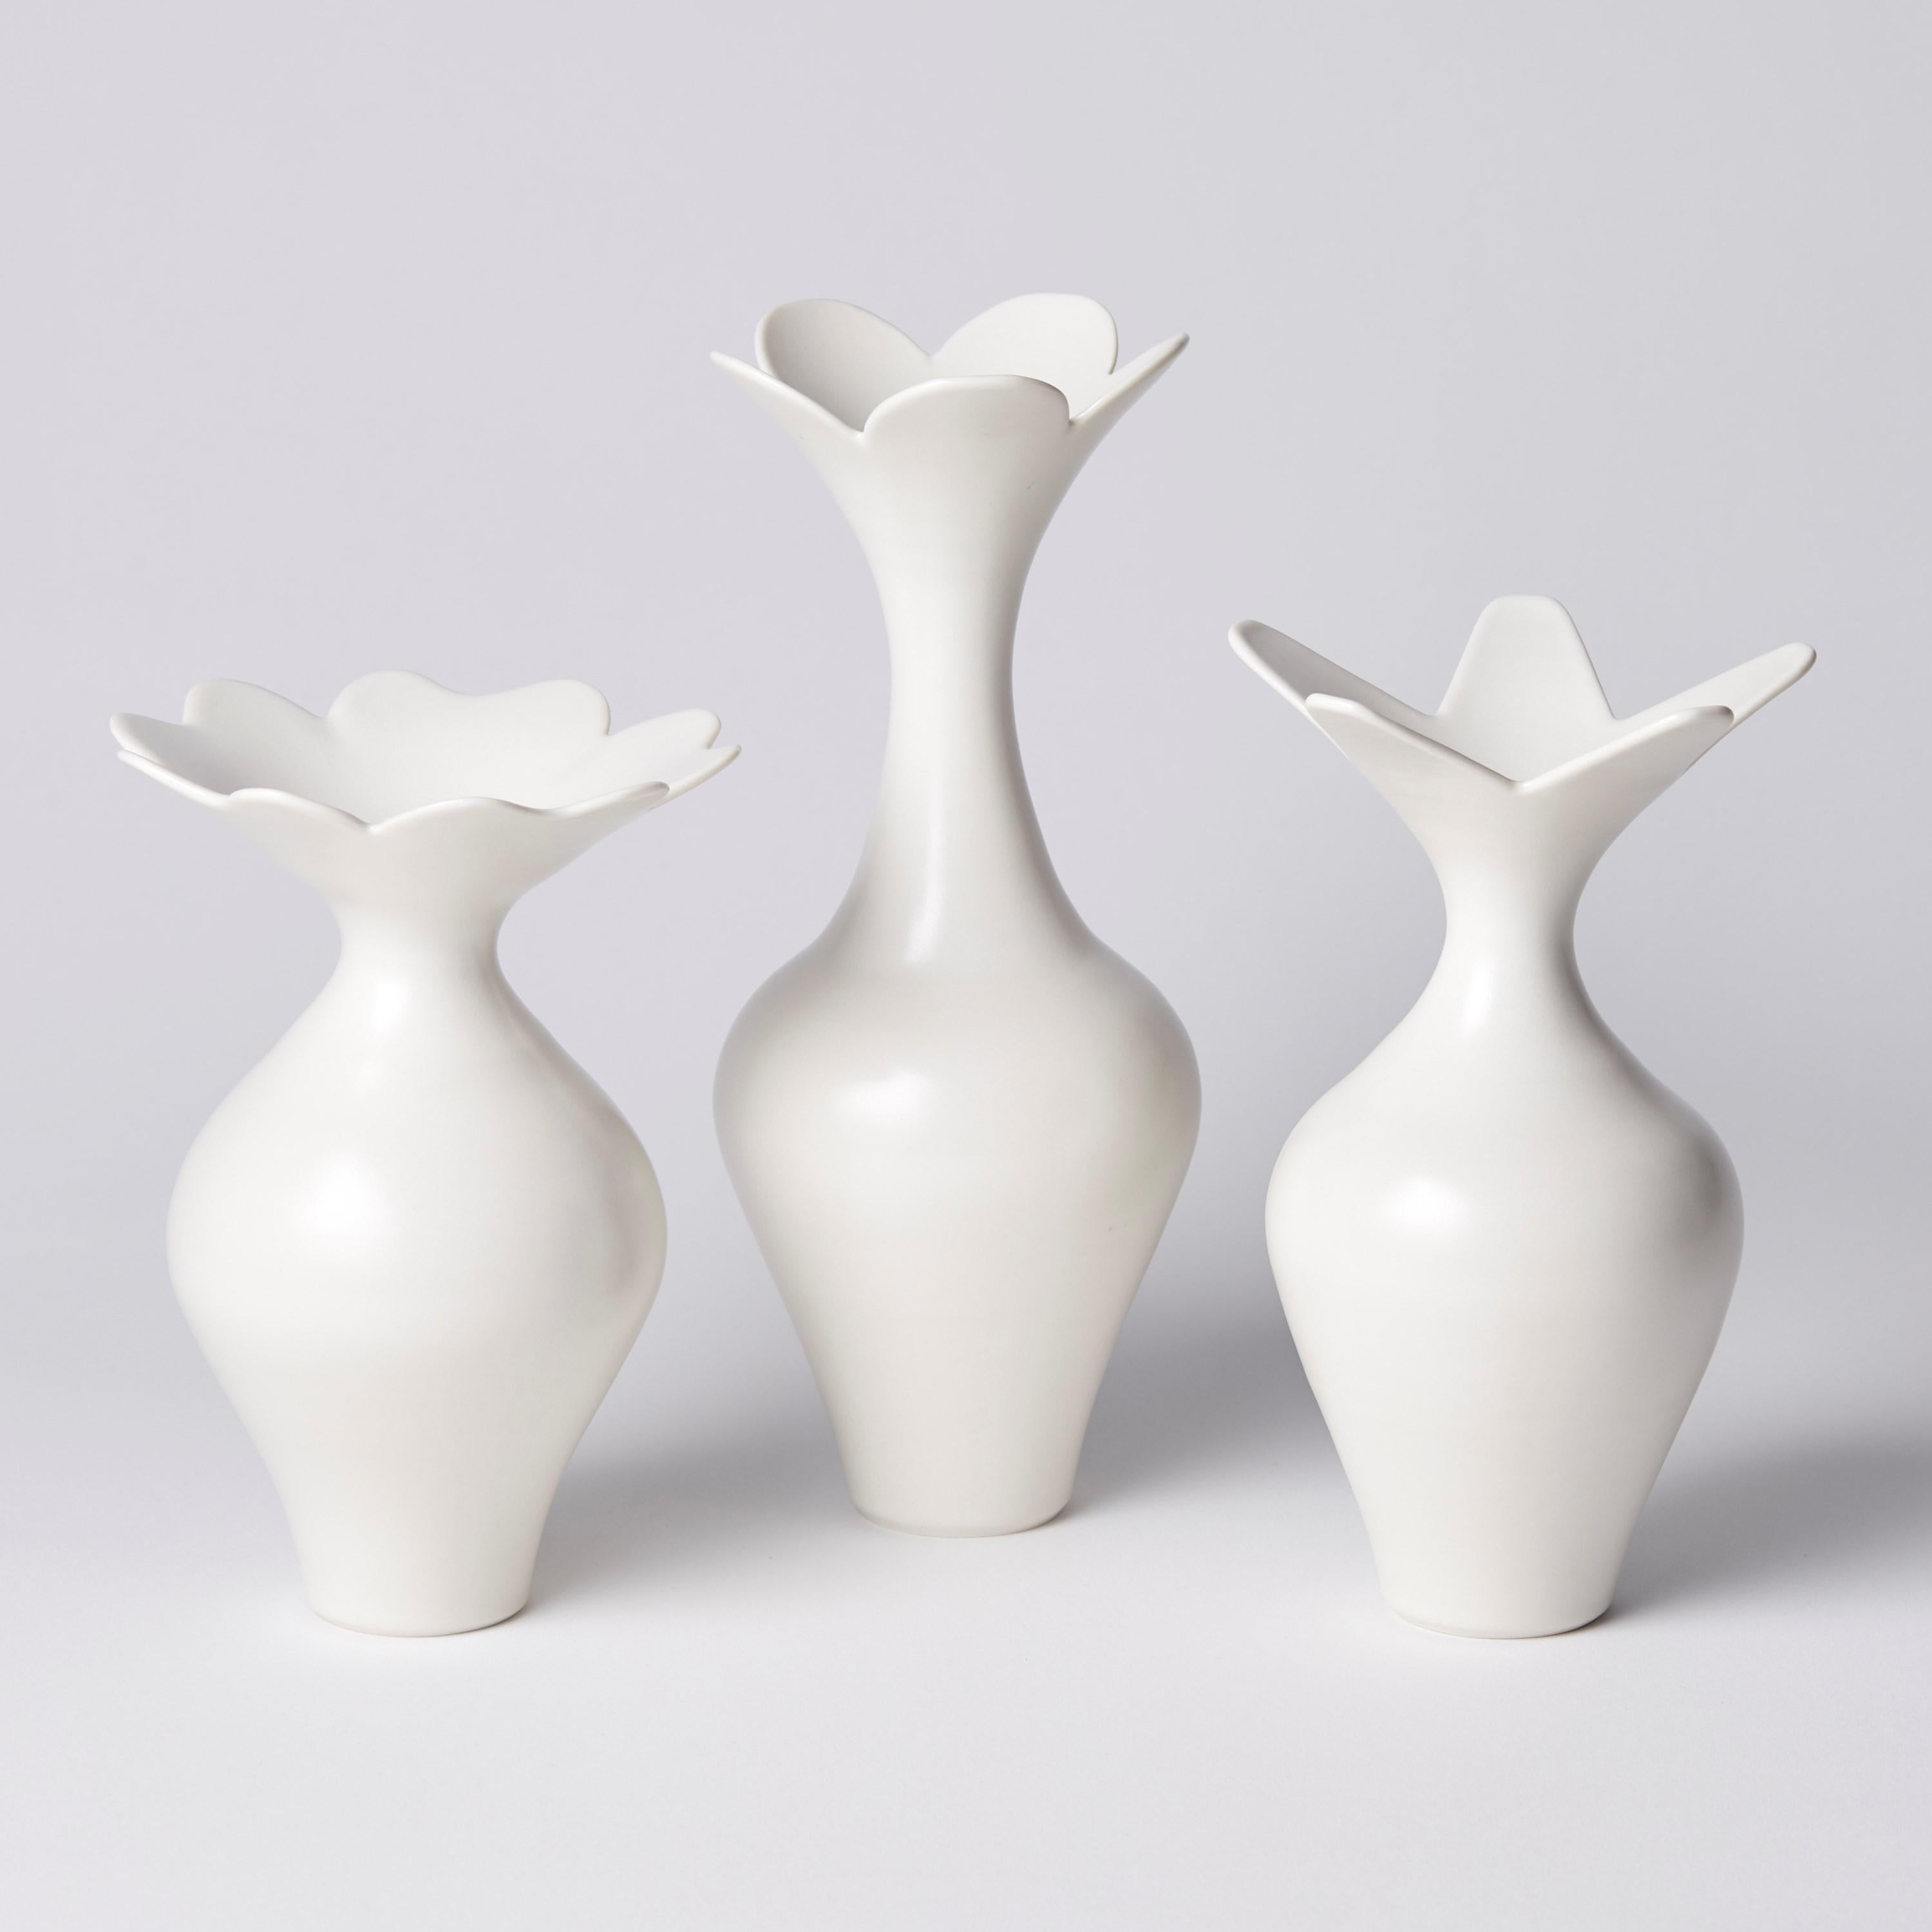 Organic Modern Vase with Star Rim, a Unique White Porcelain Vase by Vivienne Foley For Sale